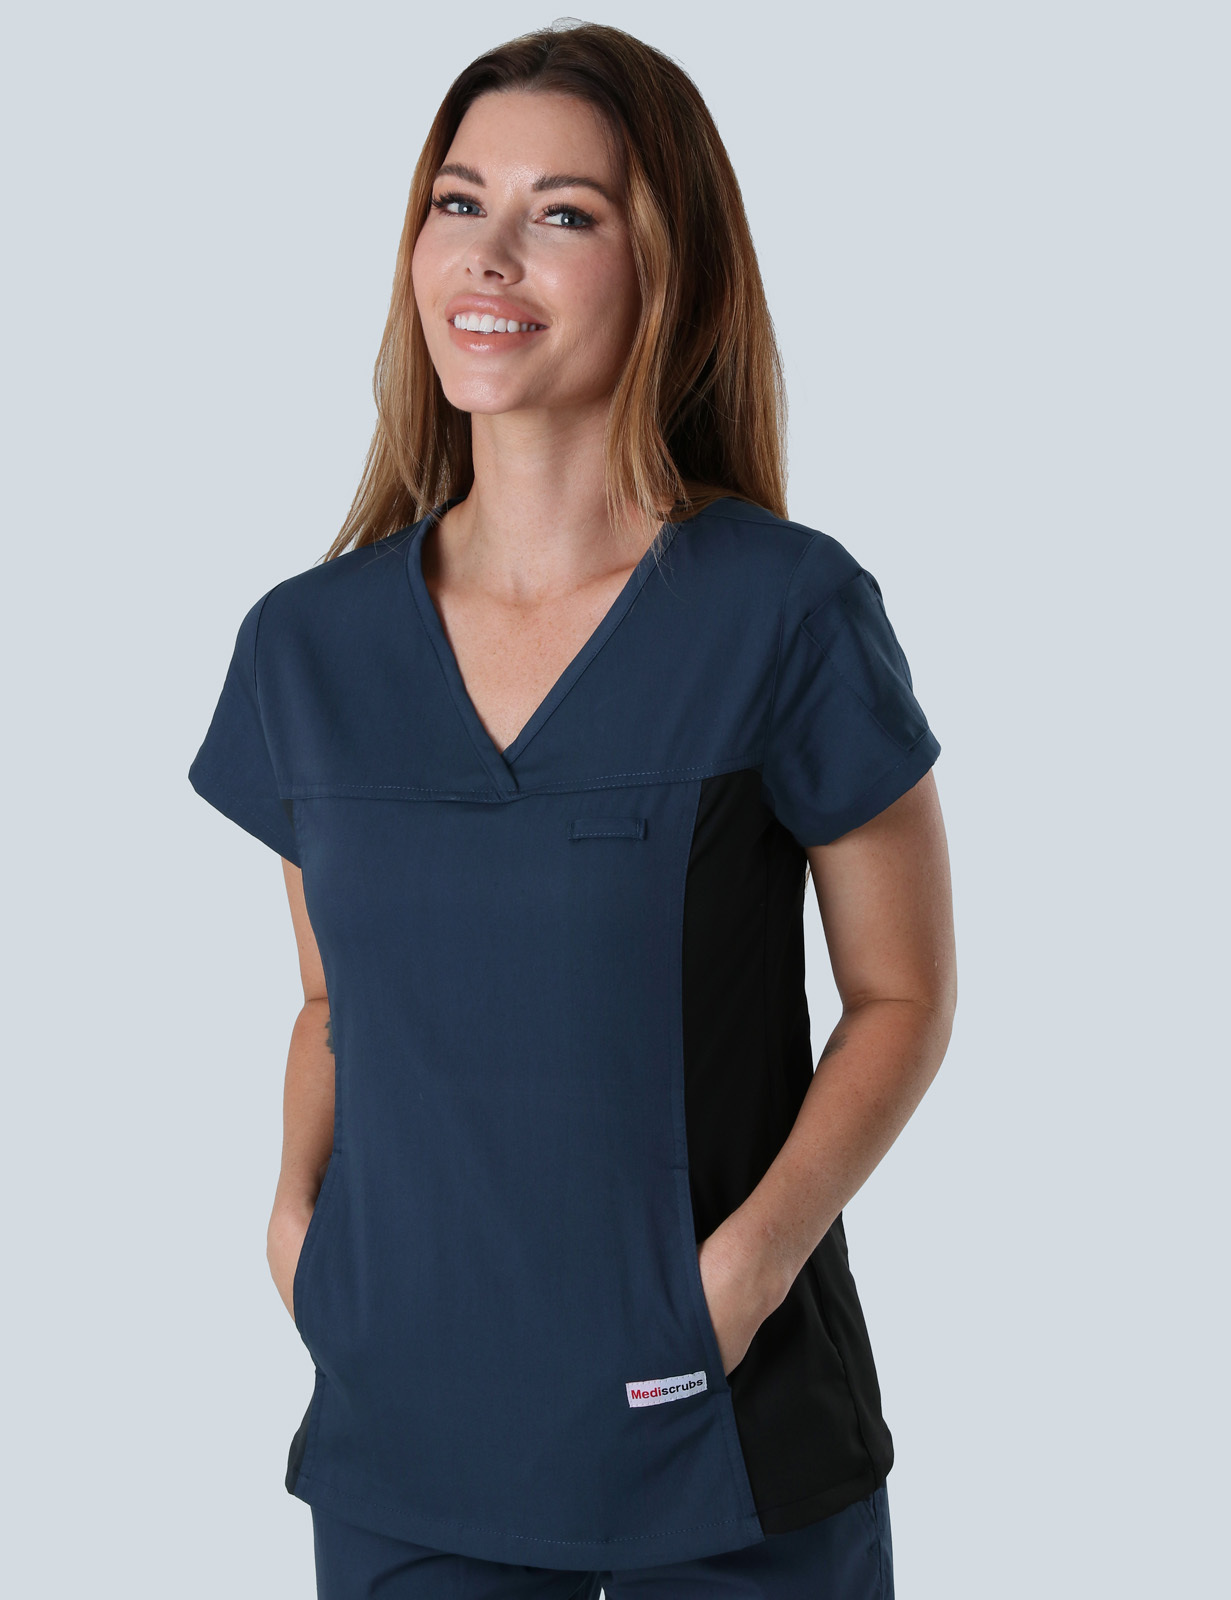 Monash Health Women's Midwife Uniform Set Bundle (Women's Fit Spandex Top and Cargo Pants in Navy + Logo)